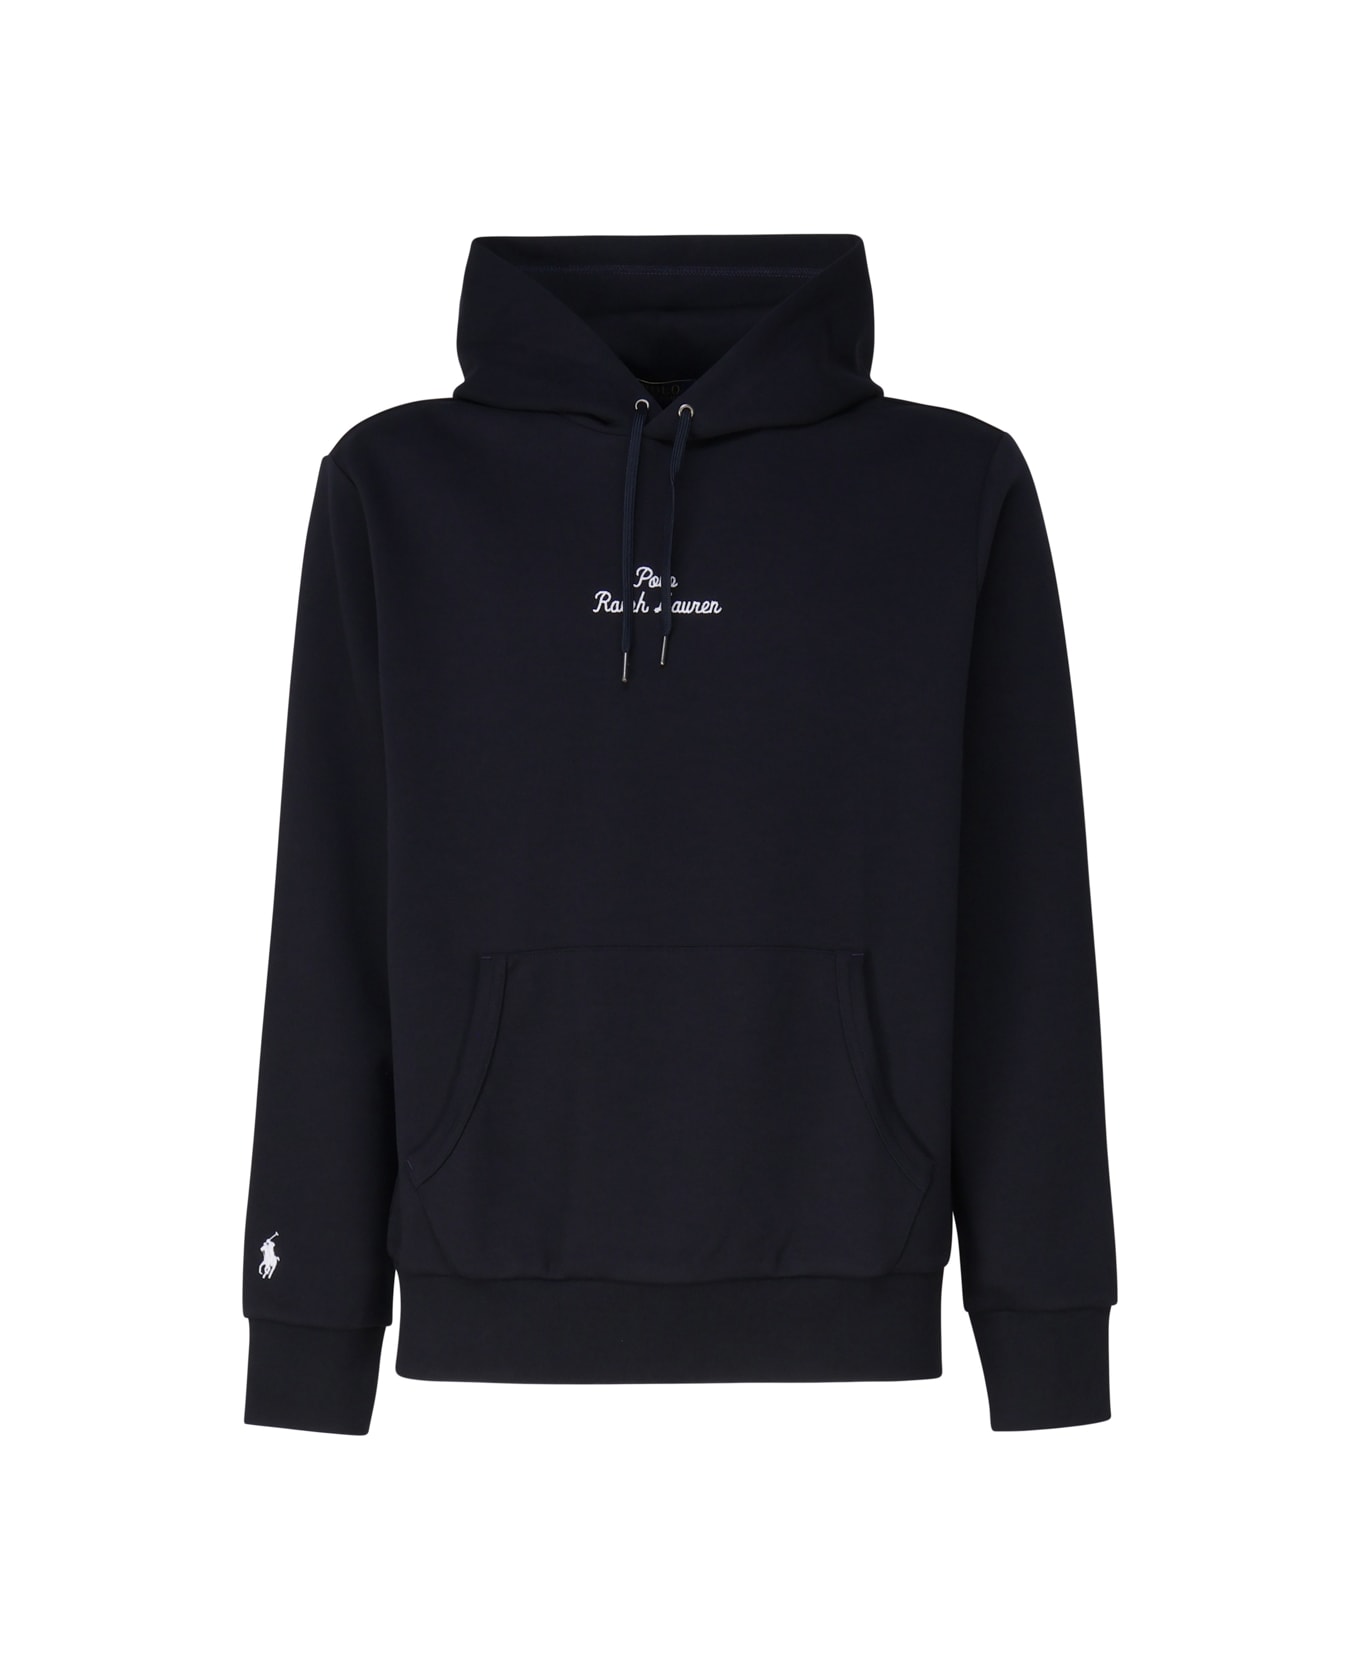 Polo Ralph Lauren Sweatshirt With Embroidery - Black